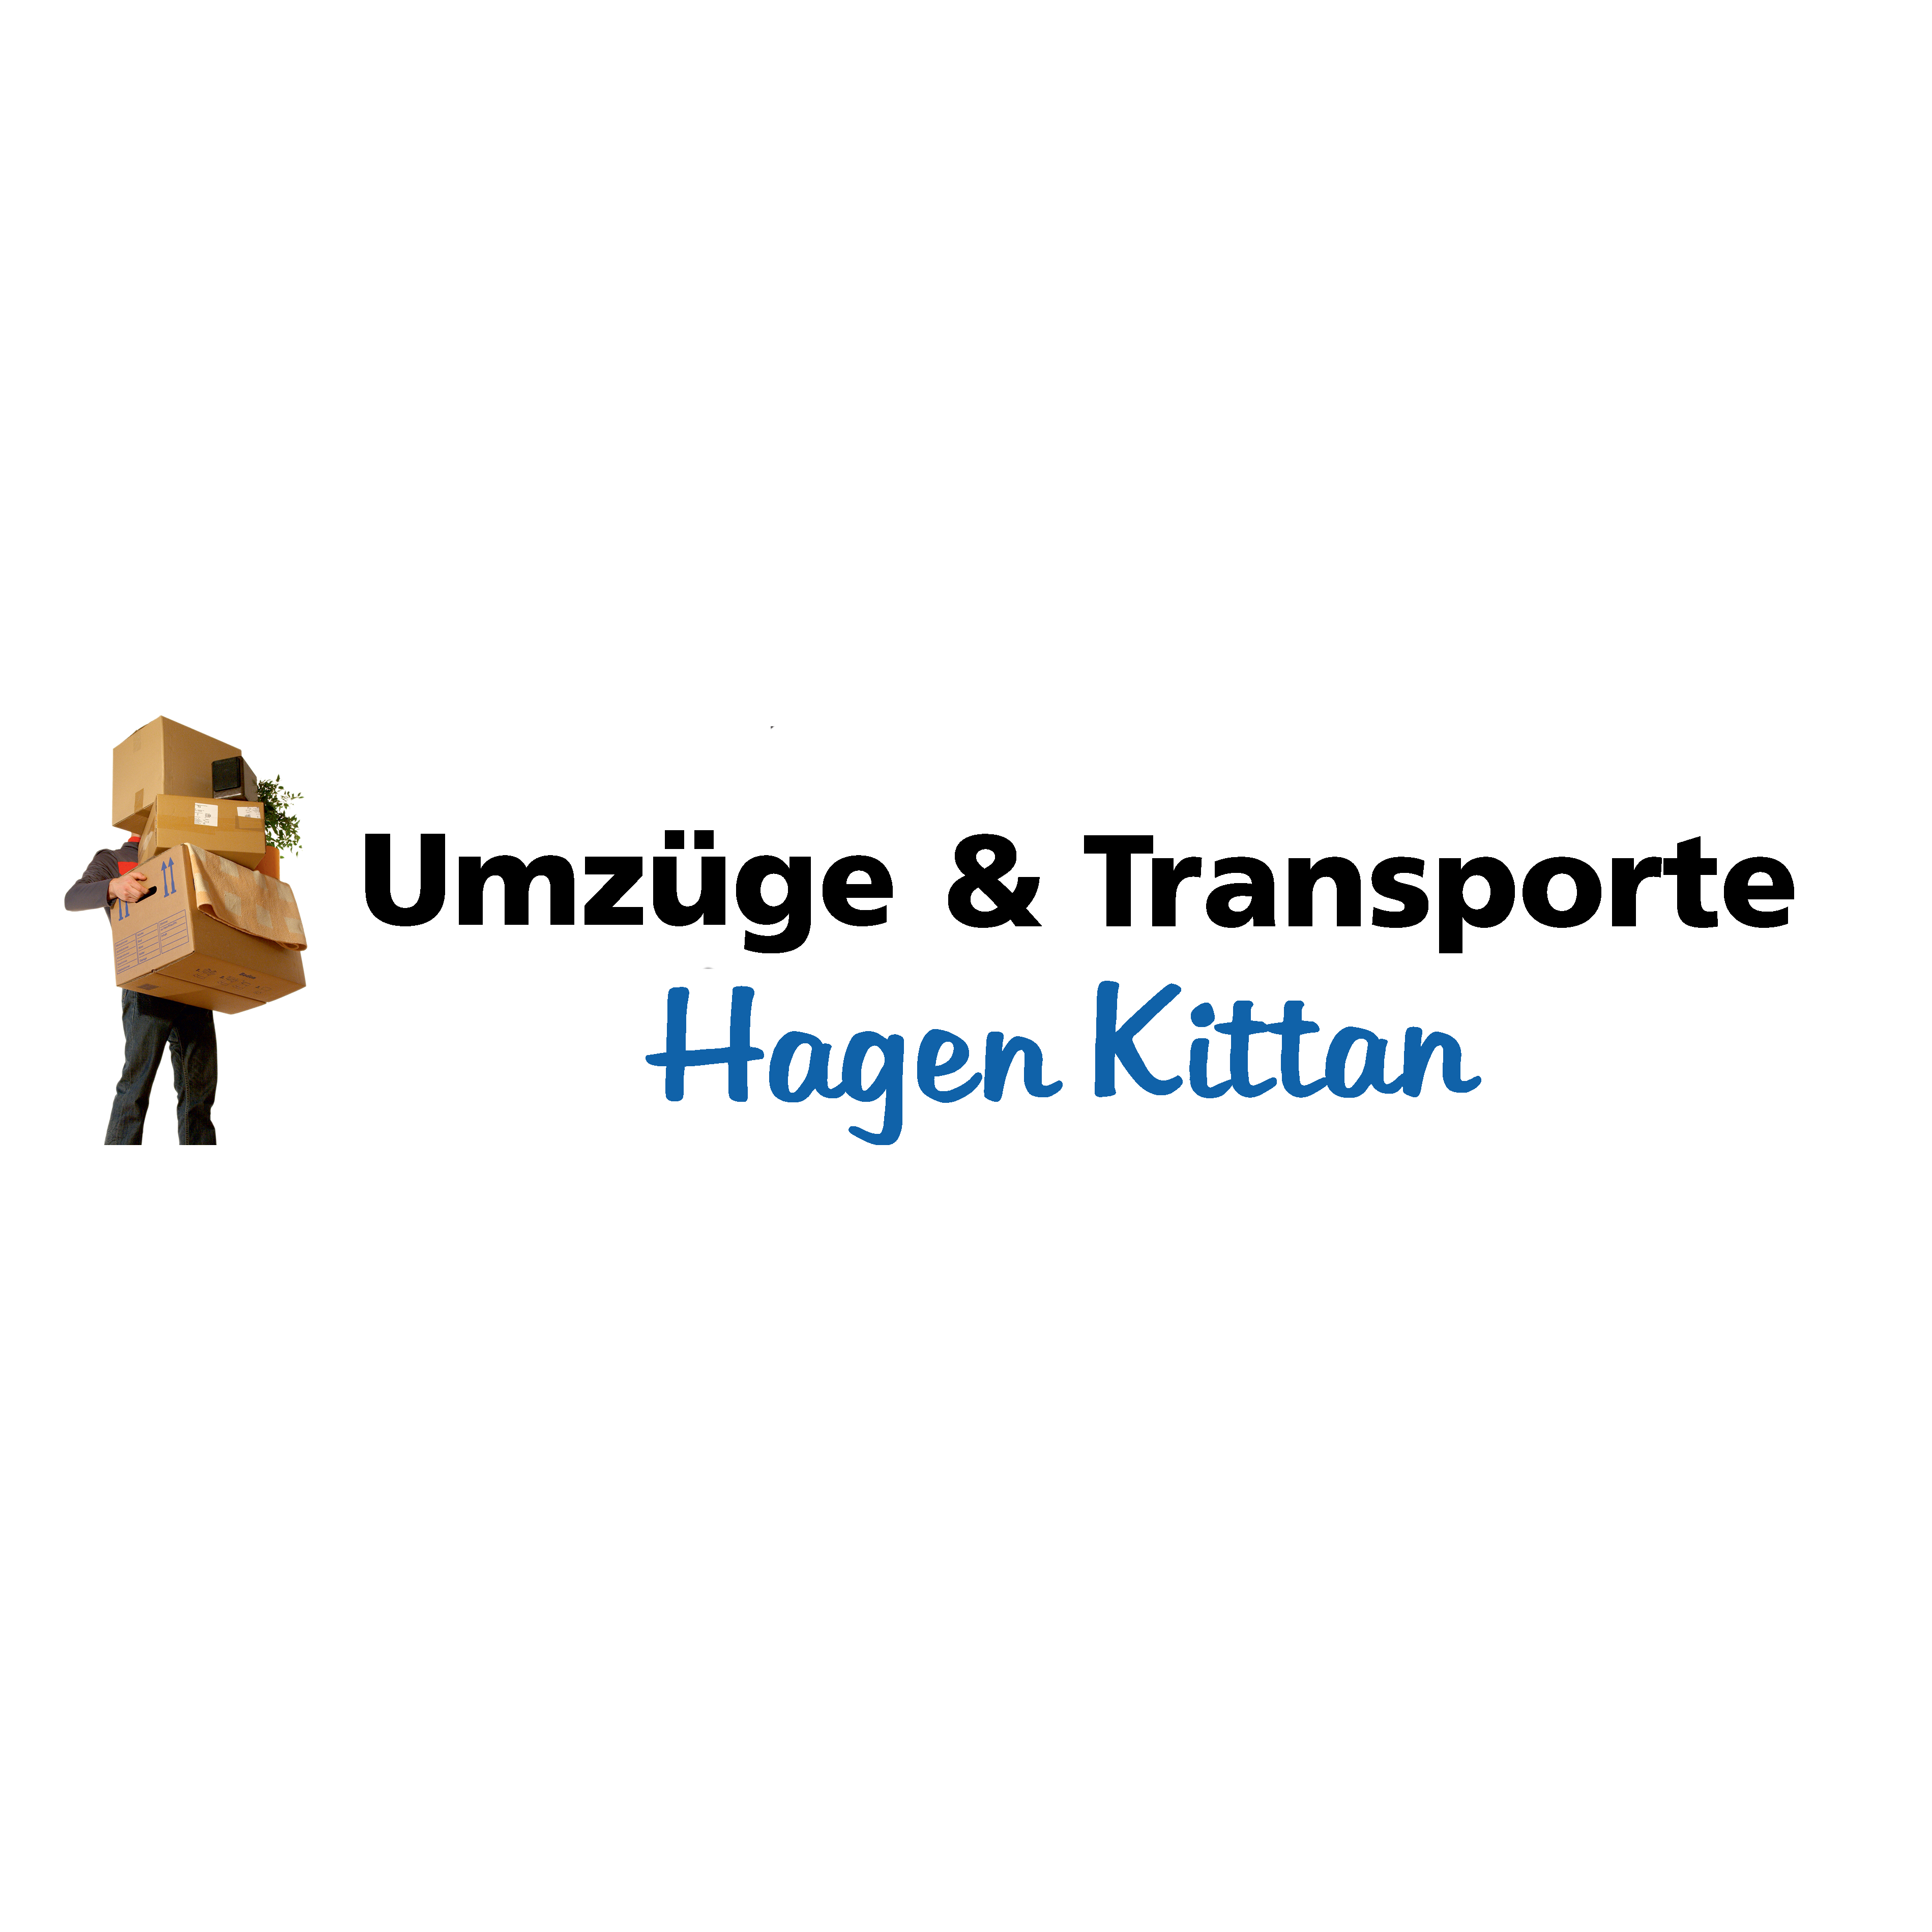 Umzüge & Transporte Hagen Kittan Logo